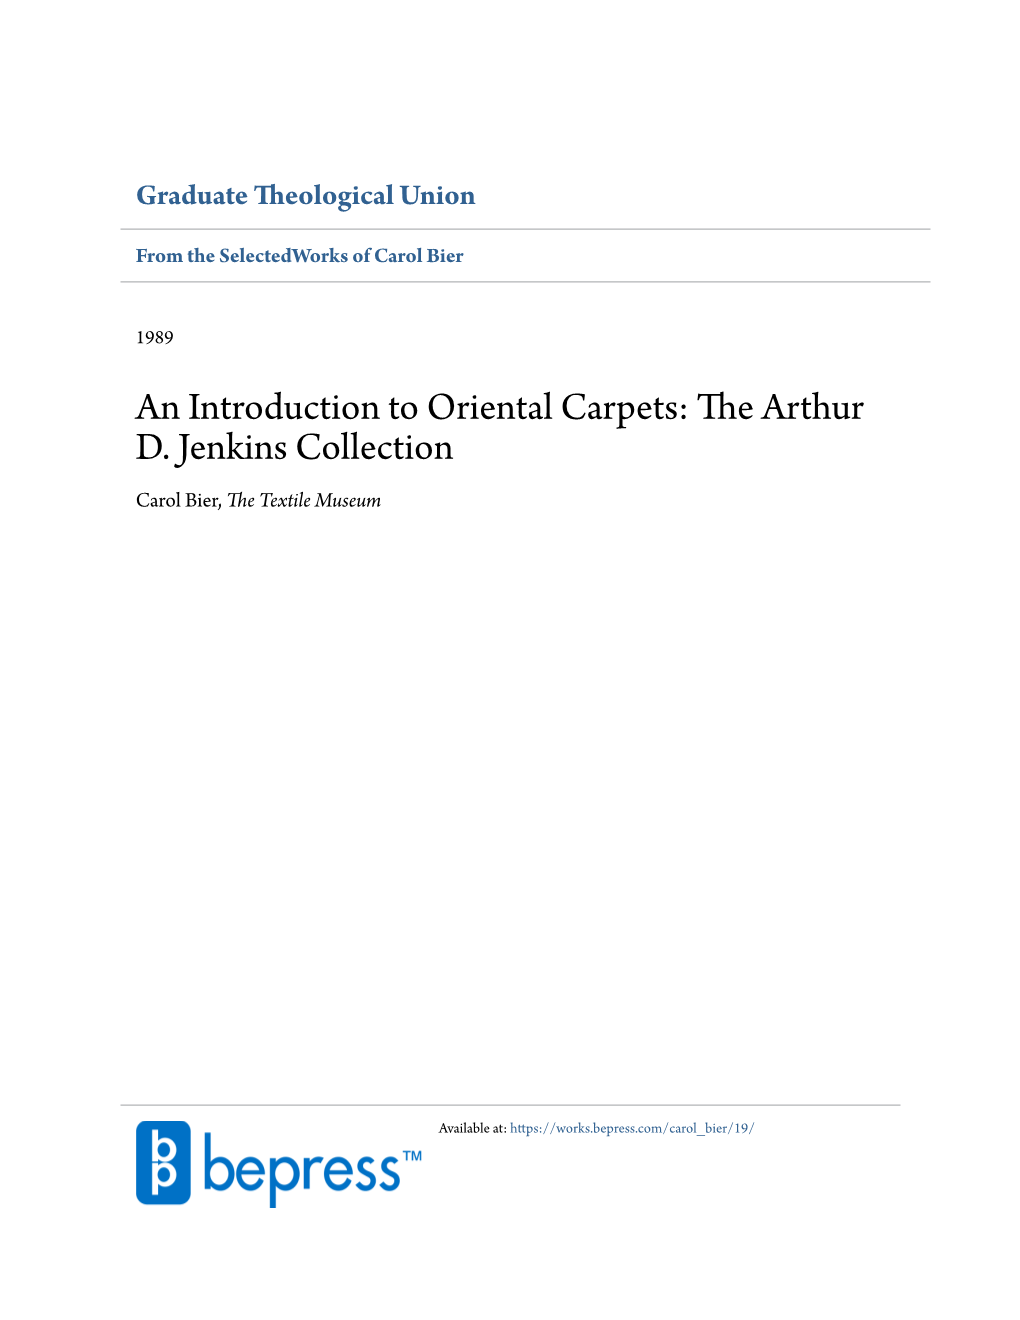 An Introduction to Oriental Carpets: the Arthur D